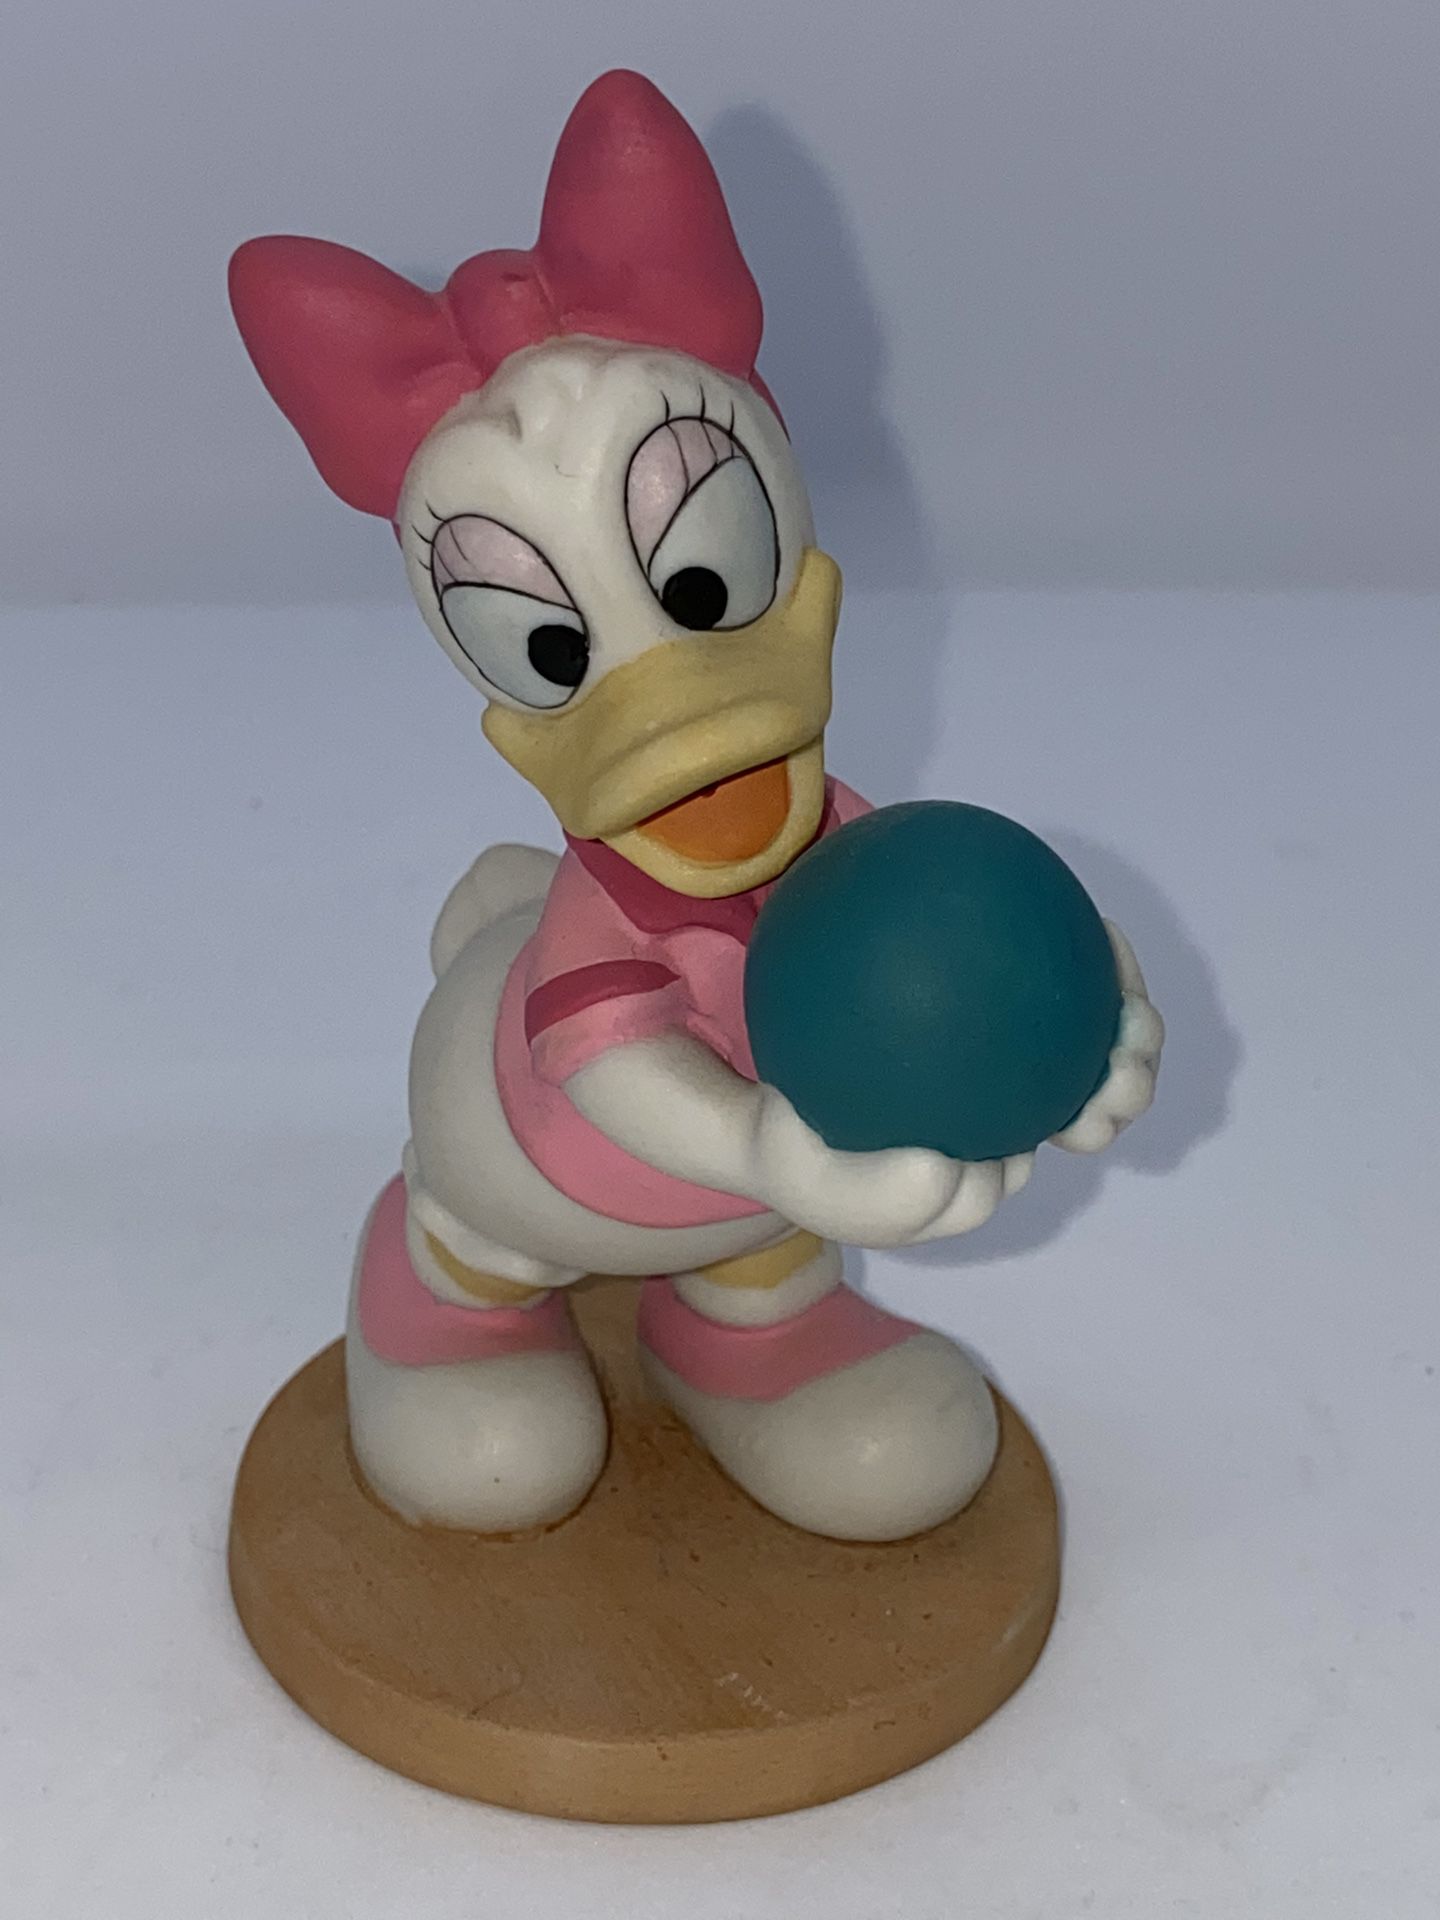 Disney Daisy Duck Figurine $20